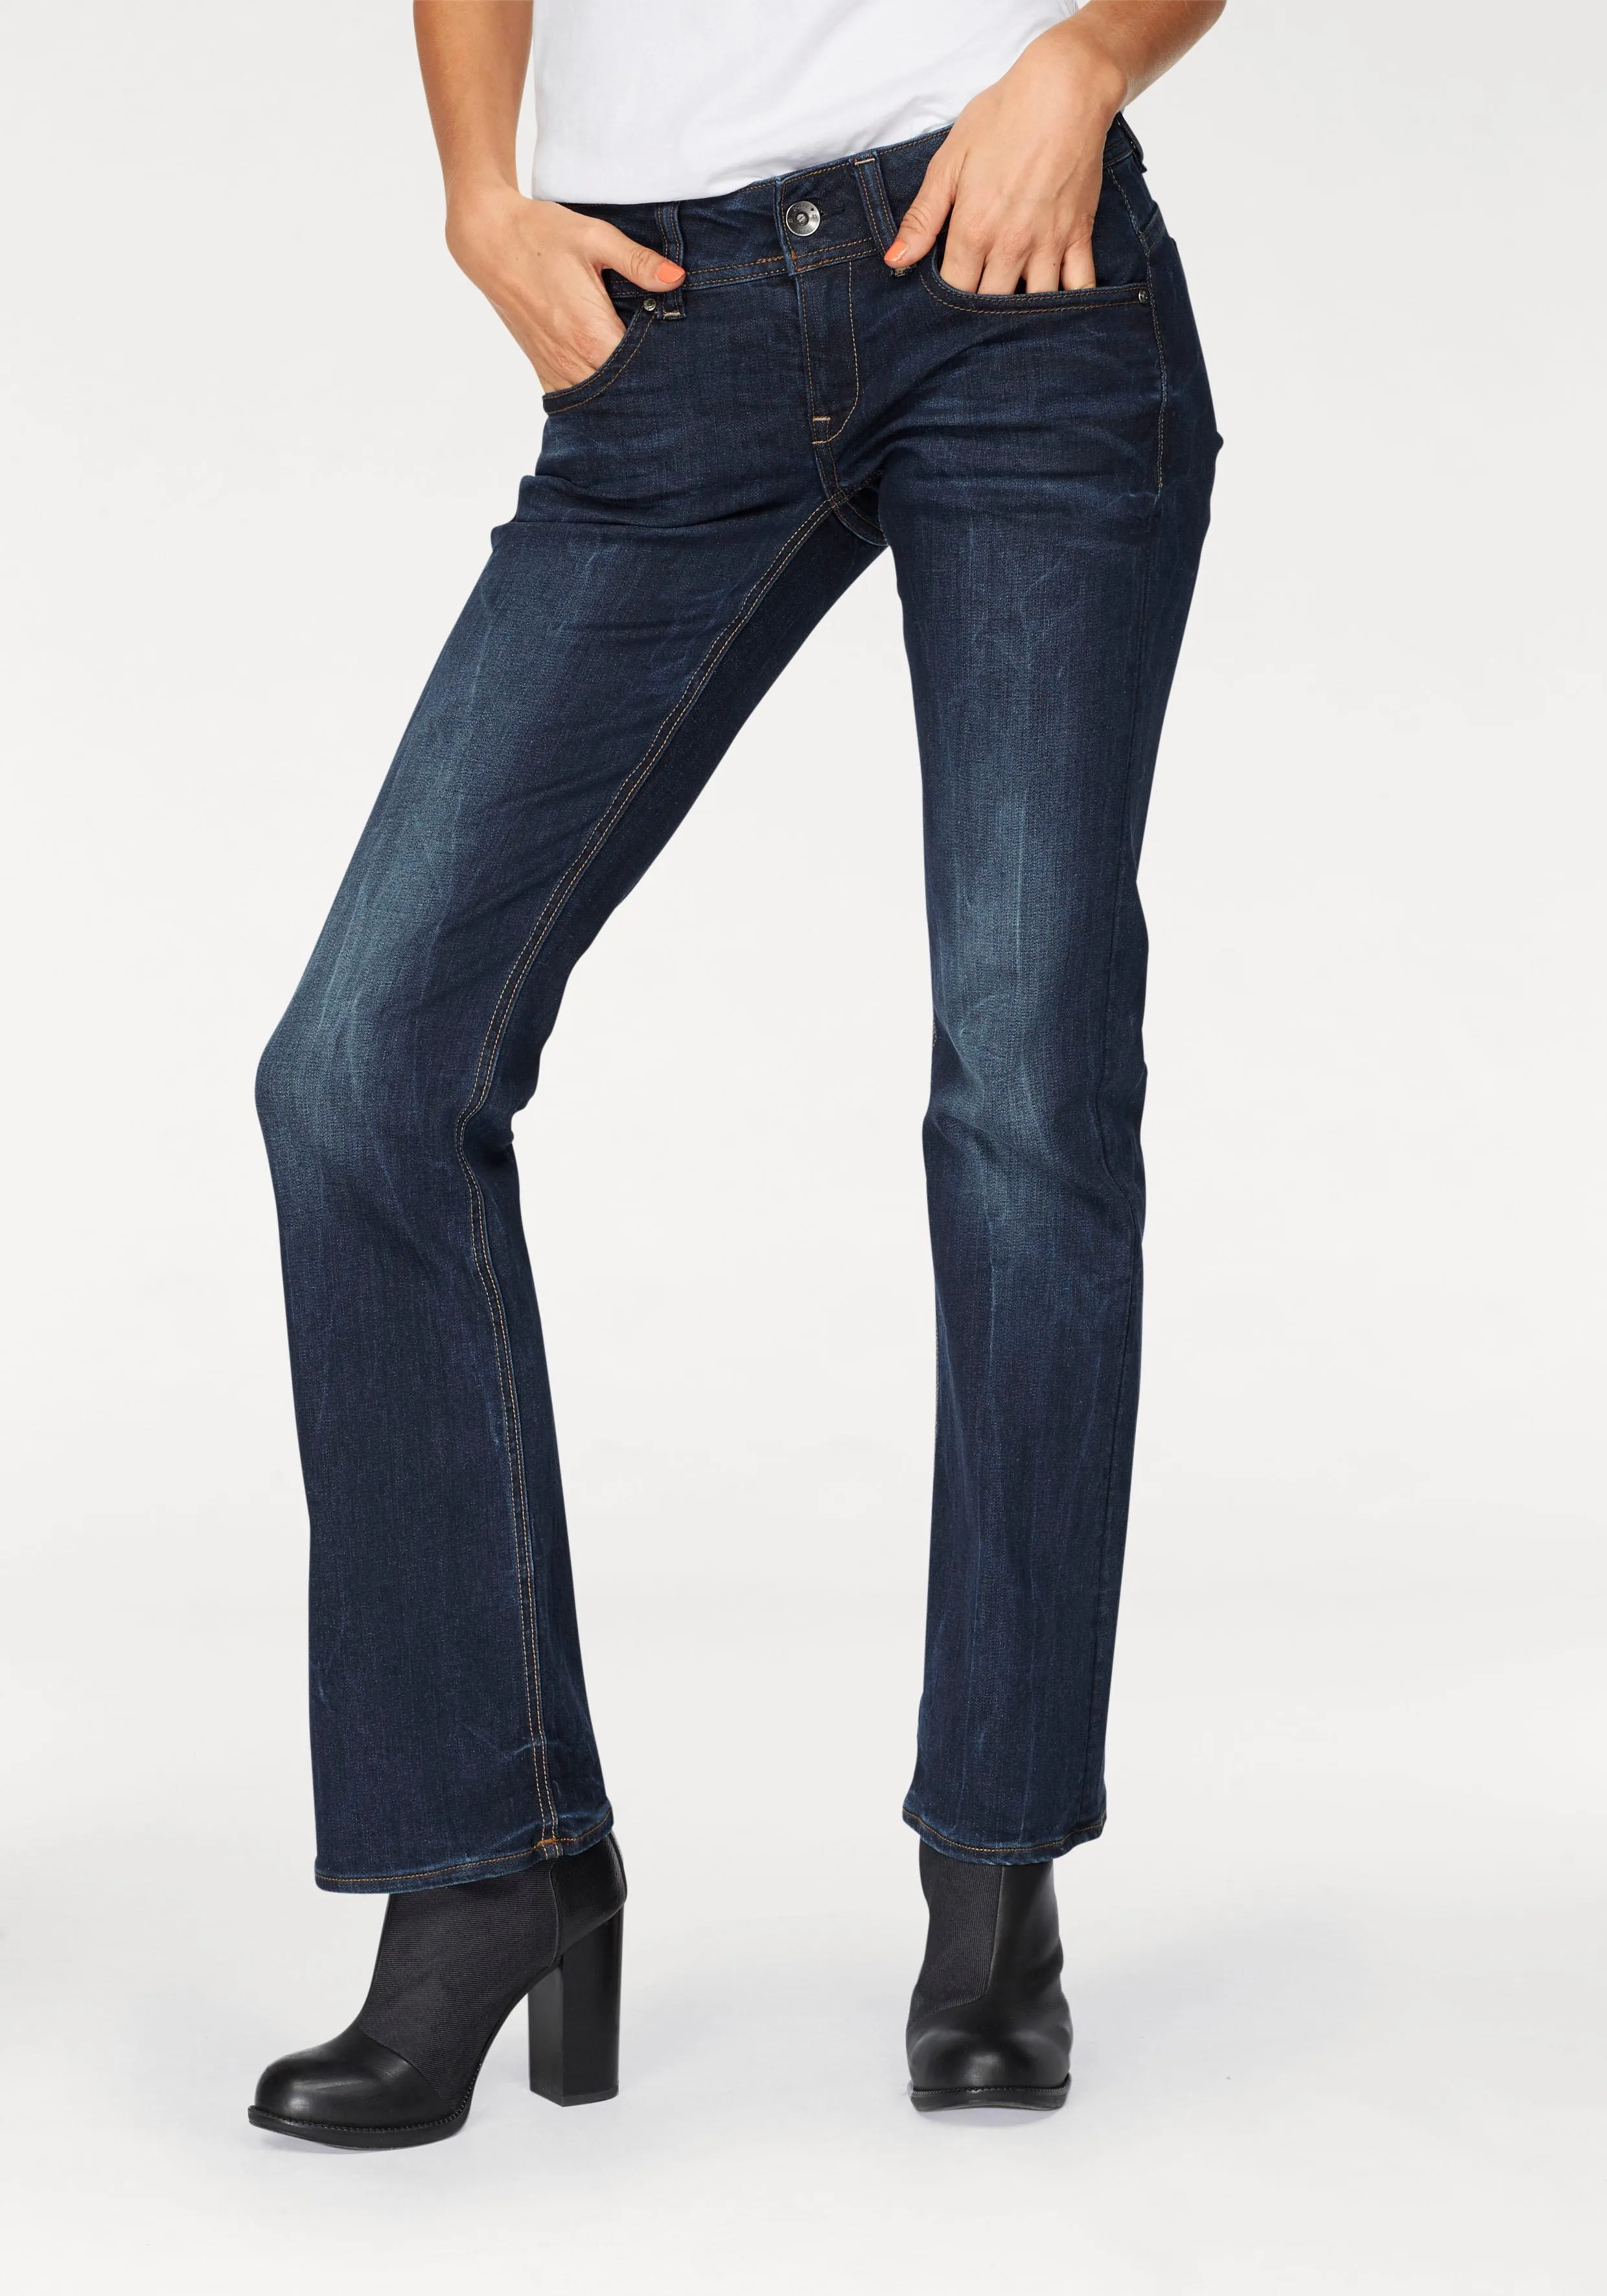 Bootcut-Jeans G-STAR RAW "Midge Saddle Bootcut" Gr. 32, Länge 32, blau (dark aged, neutro stretch denim) Damen Jeans Bootcut